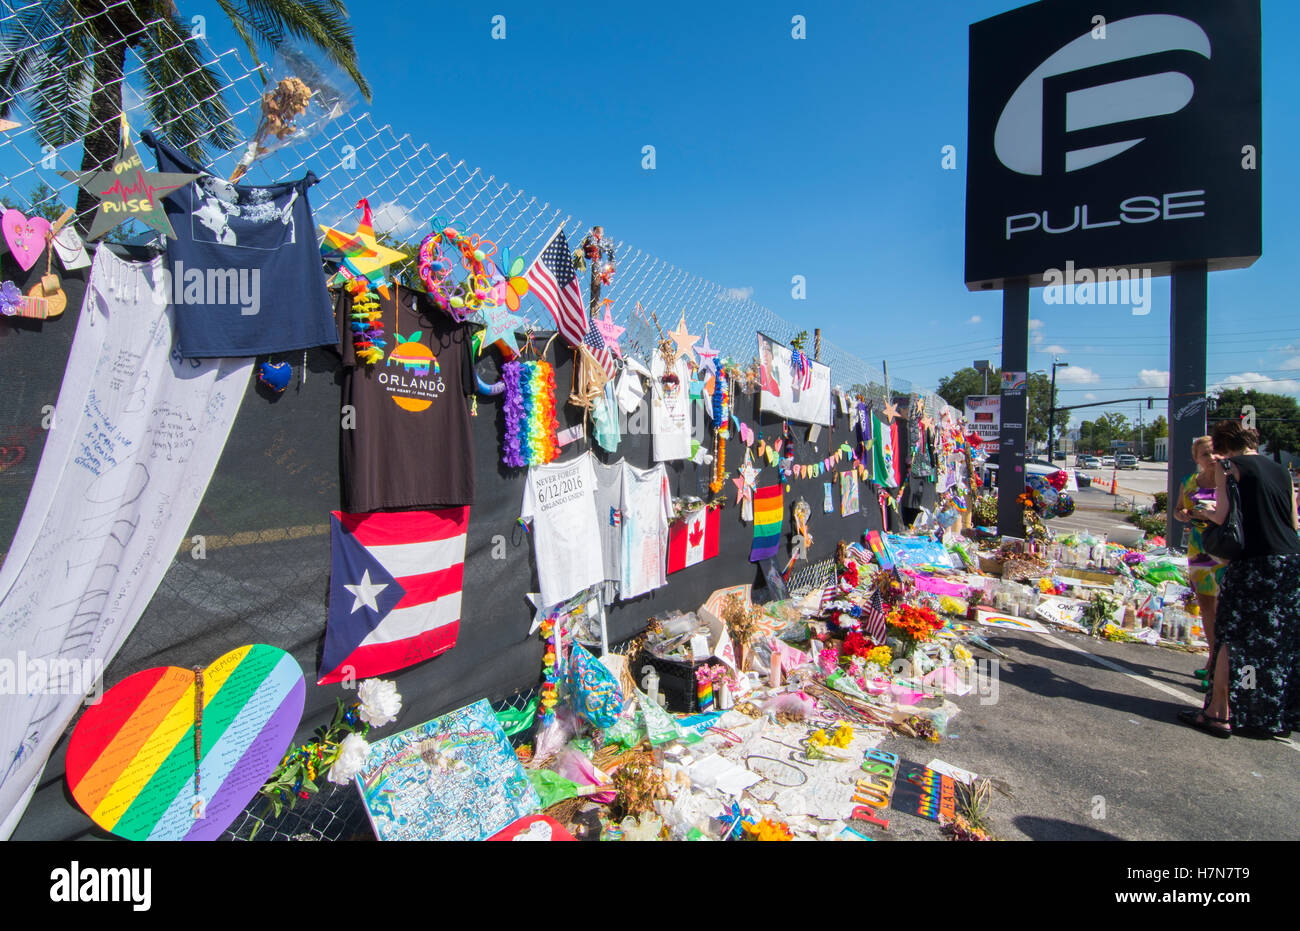 Orlando Florida Pulse night club tragedy shooting memorial at gay bar by terrorist on June 12, 2016 Stock Photo